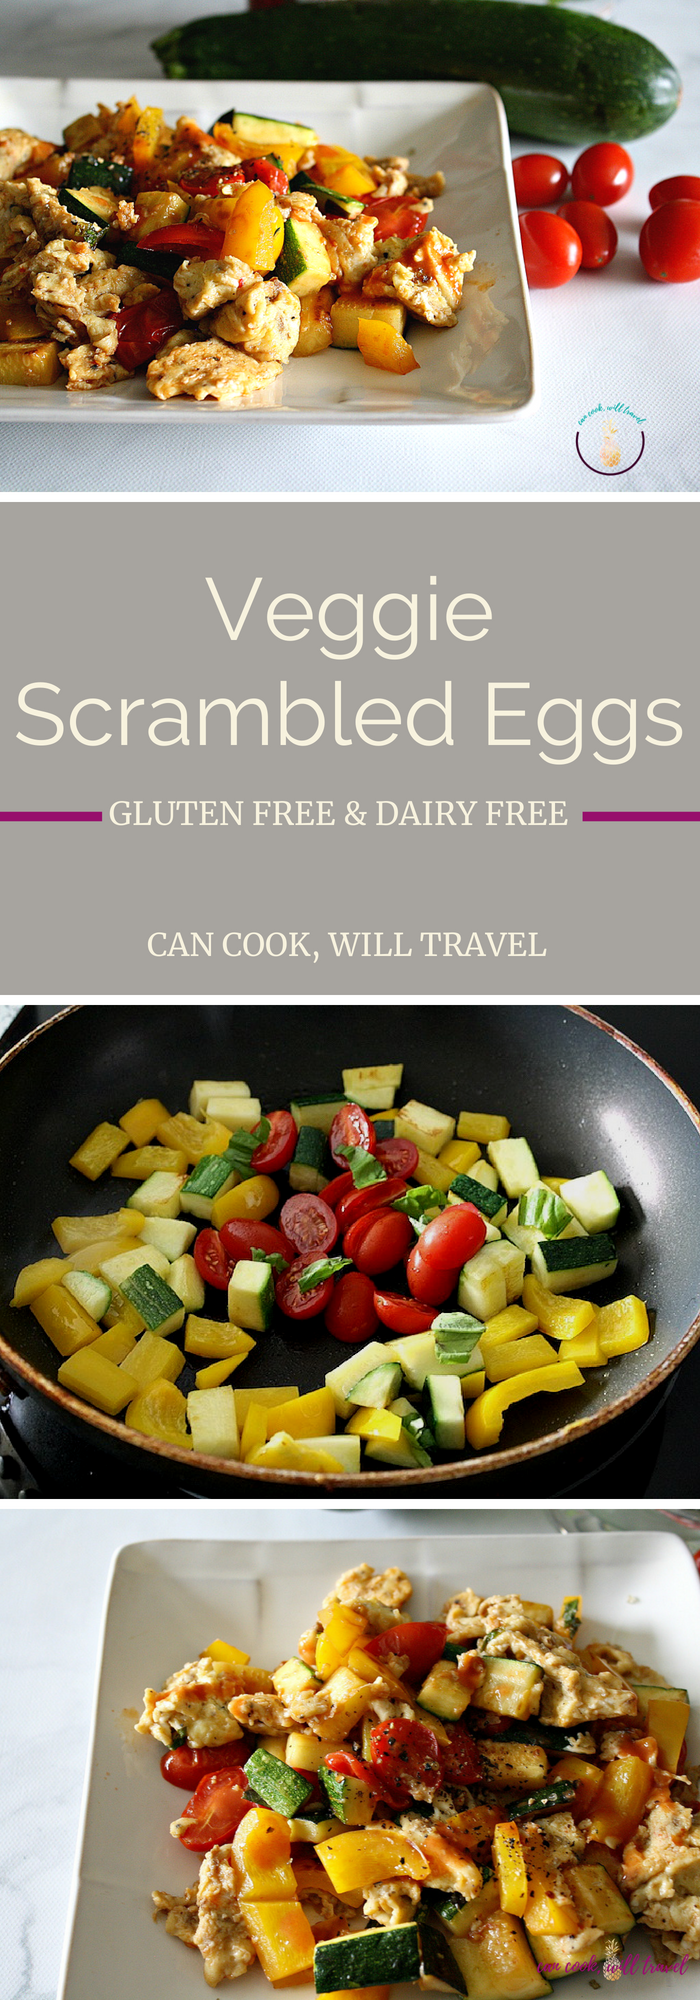 Veggie Scrambled Eggs_Collage2